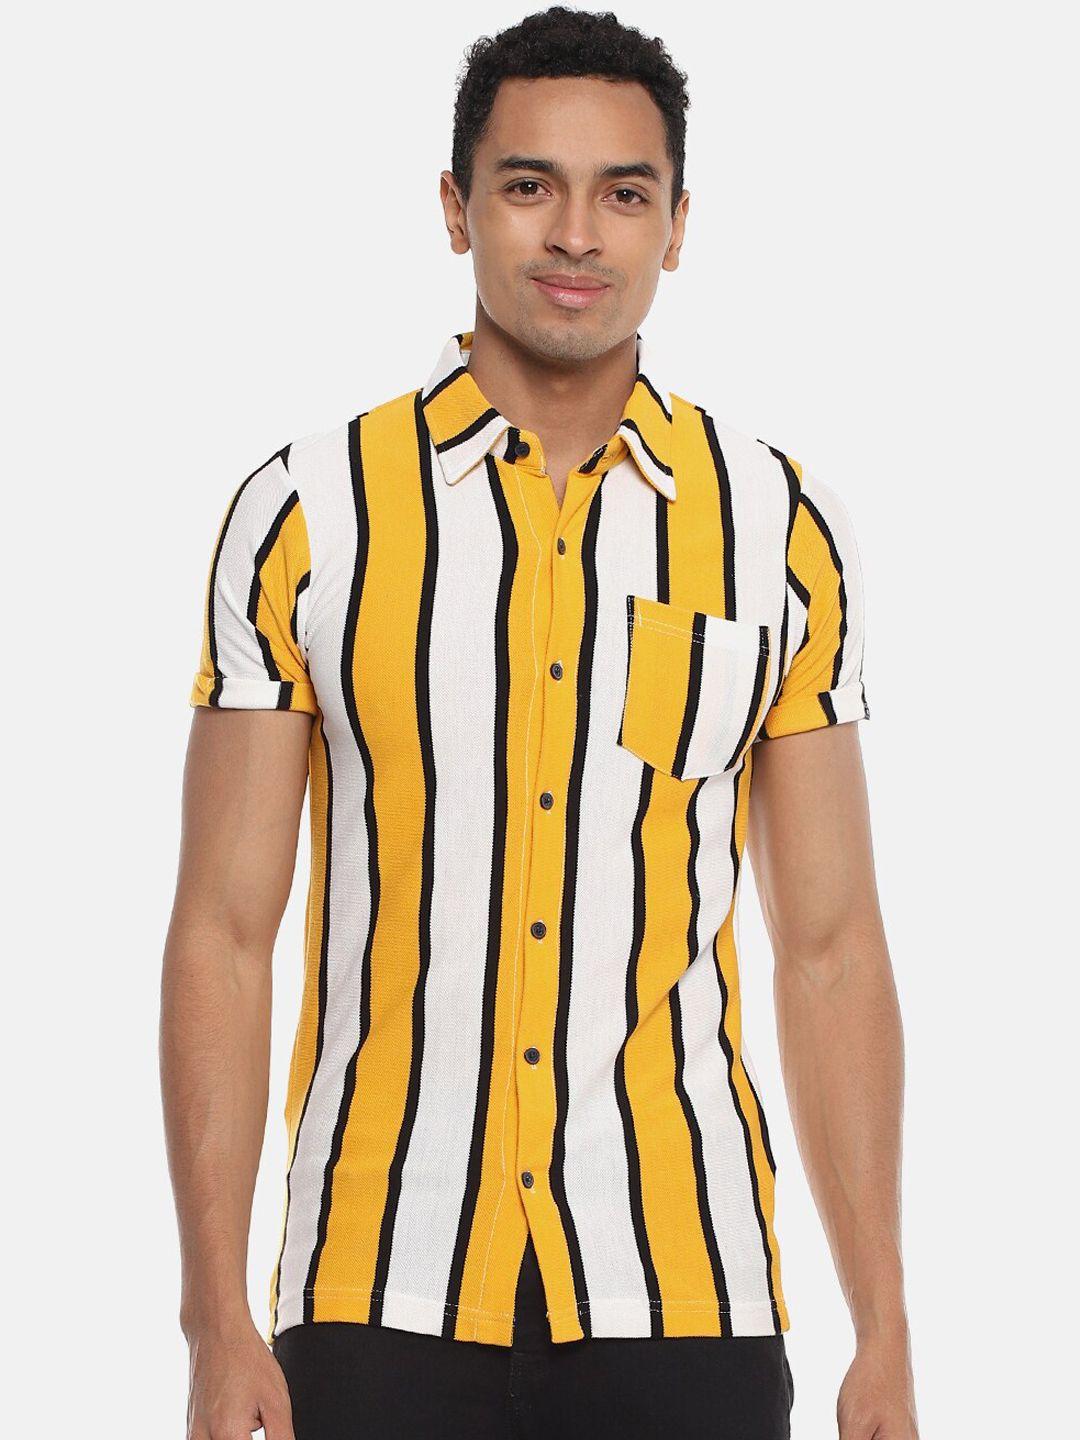 campus sutra men mustard yellow & white regular fit striped casual shirt